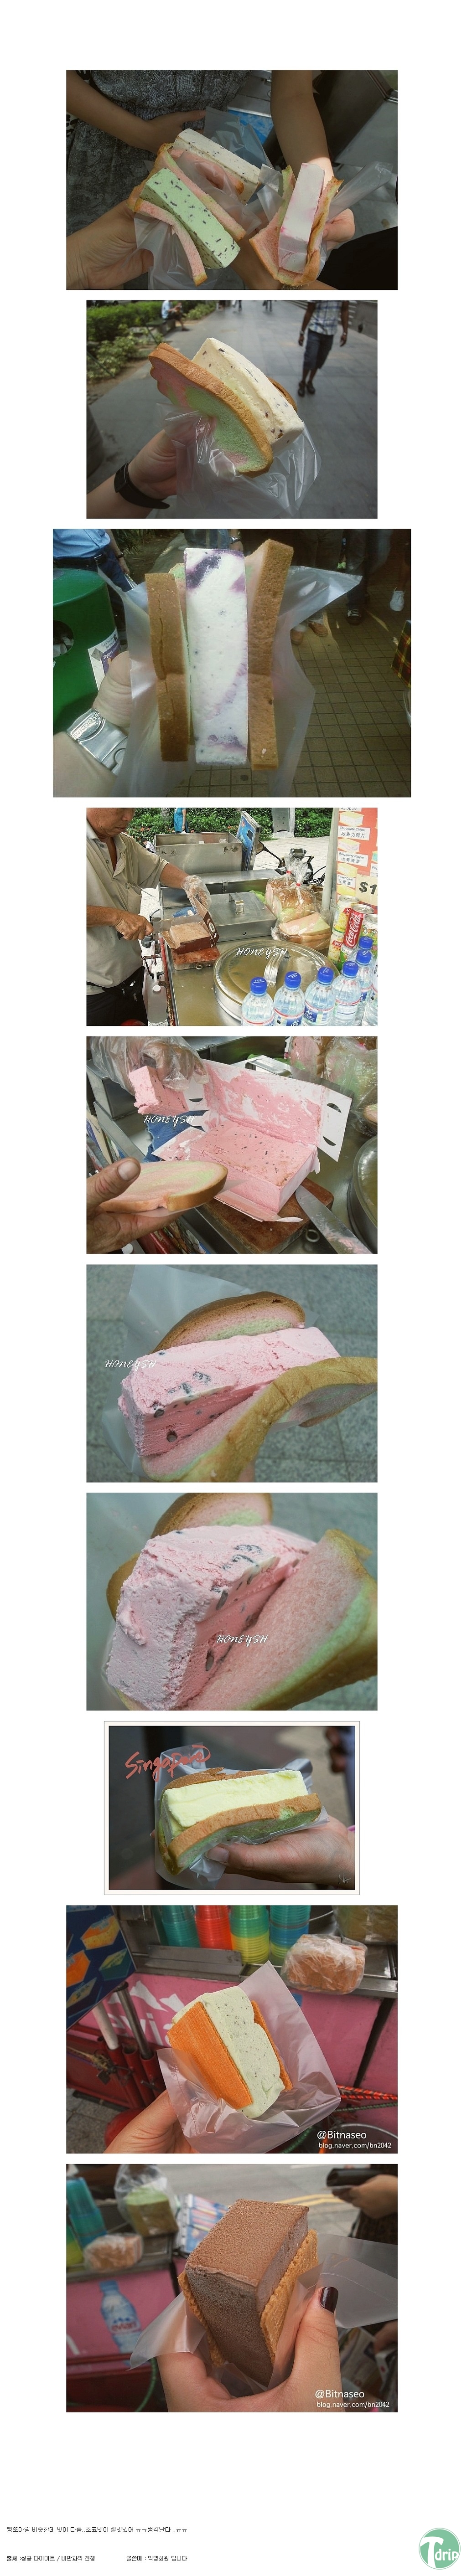 1 (12).jpg : 싱가포르 아이스크림.jpg